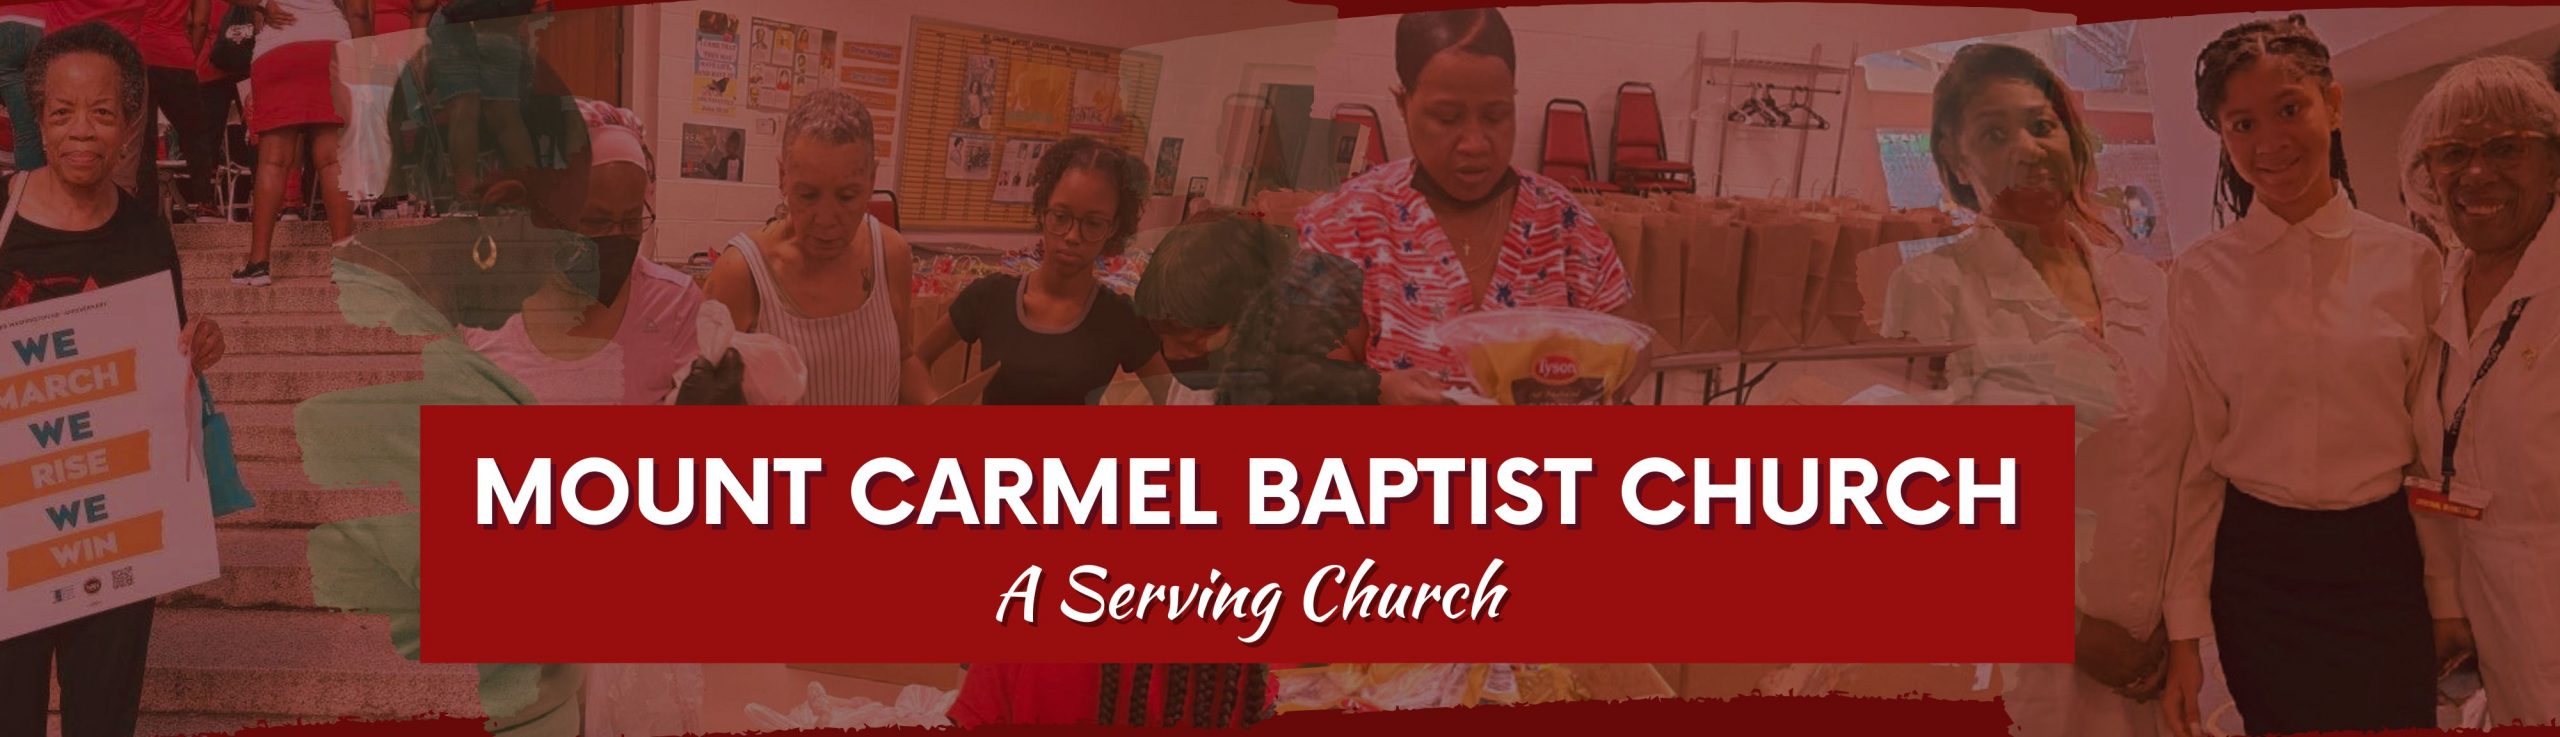 We are Mount Carmel Baptist Church - A serving church